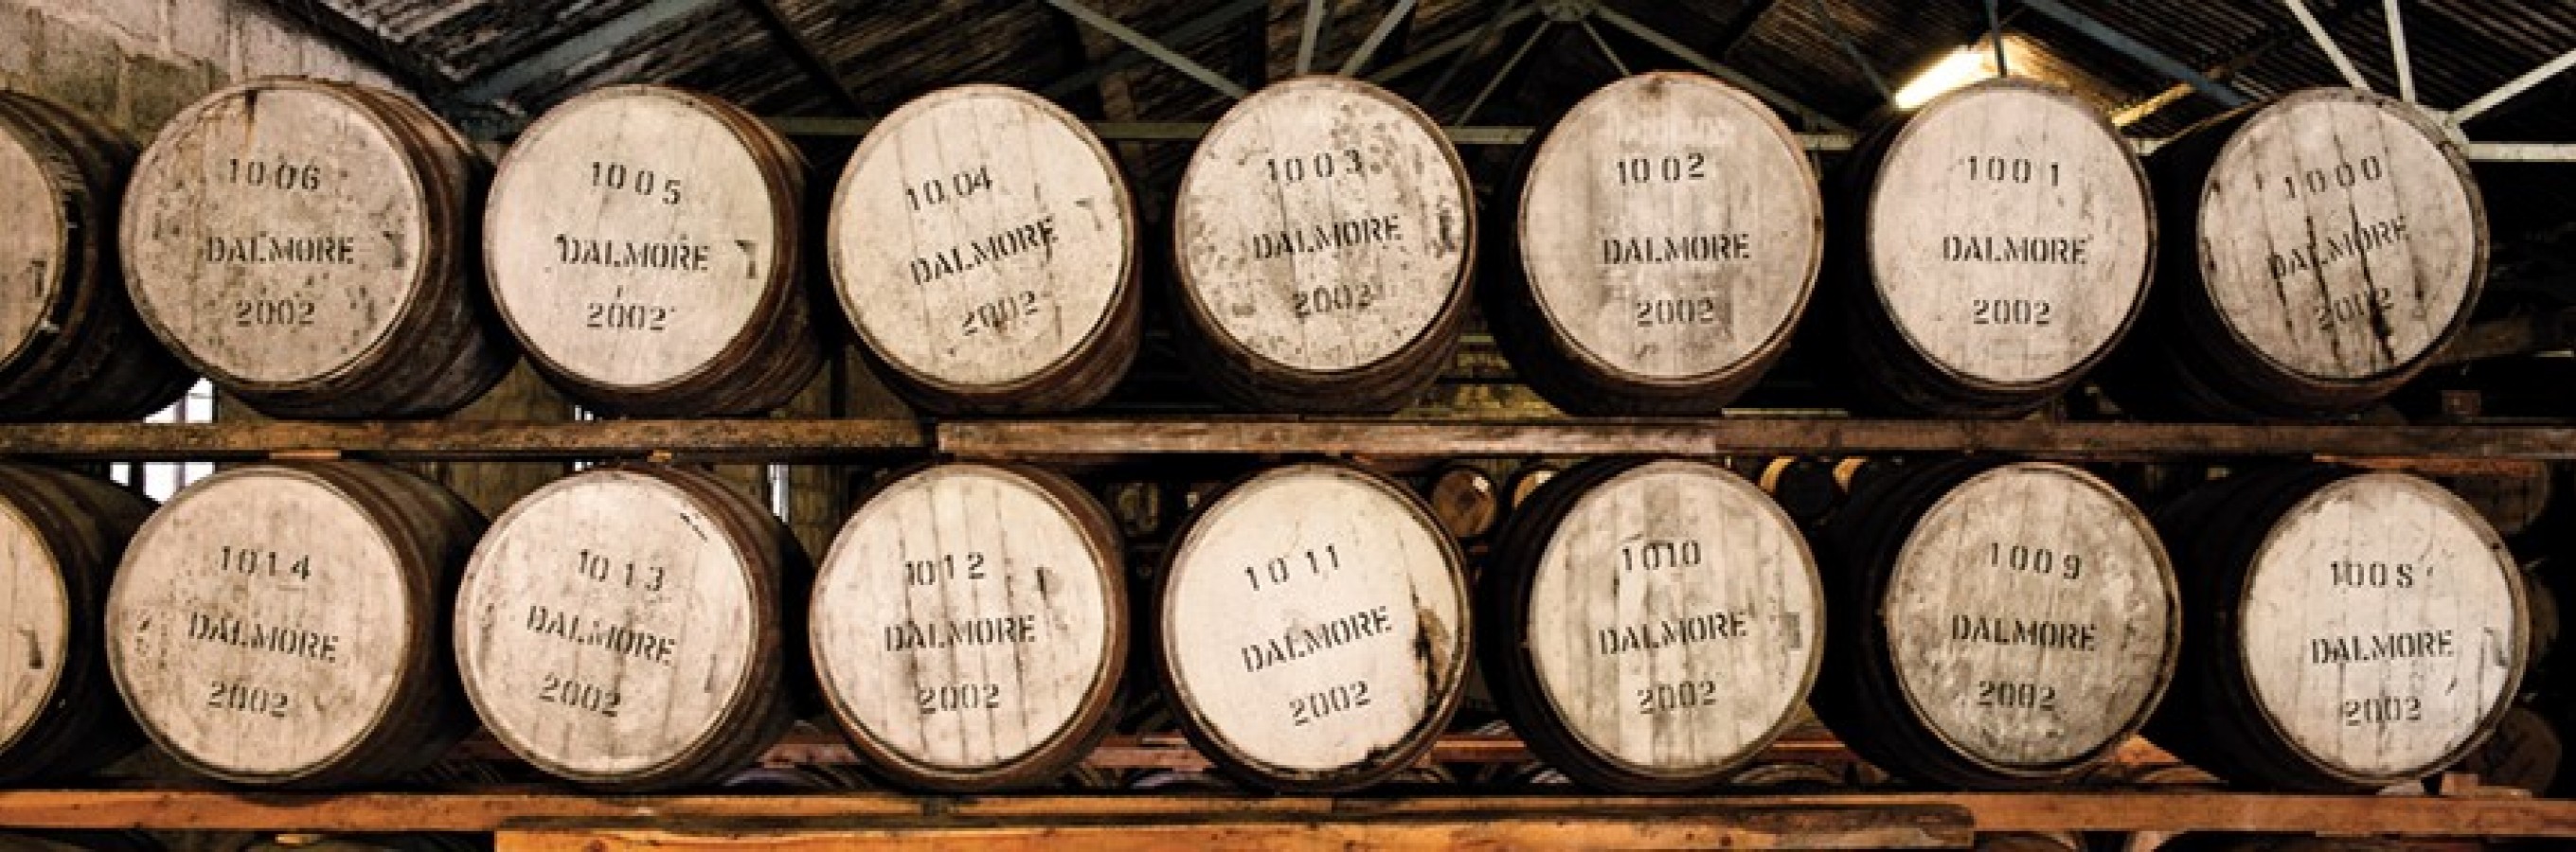 Dalmore whisky distillery casks